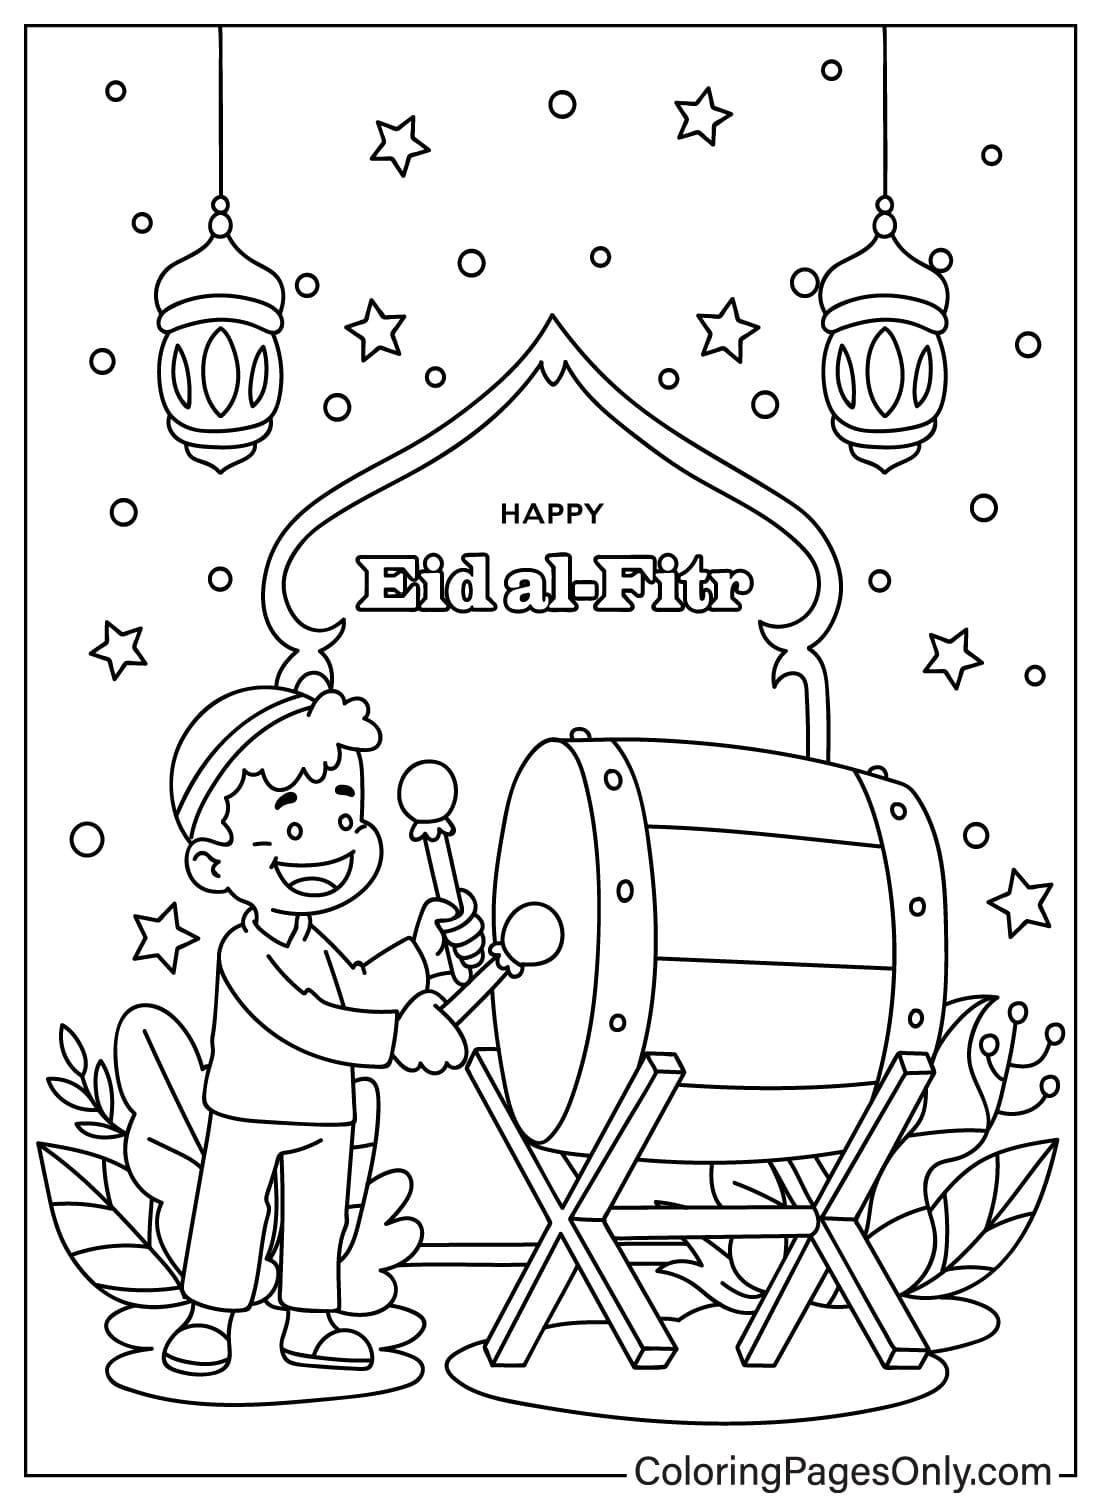 Gelukkige Eid Al-Fitr kleurplaat van Eid Al-Fitr